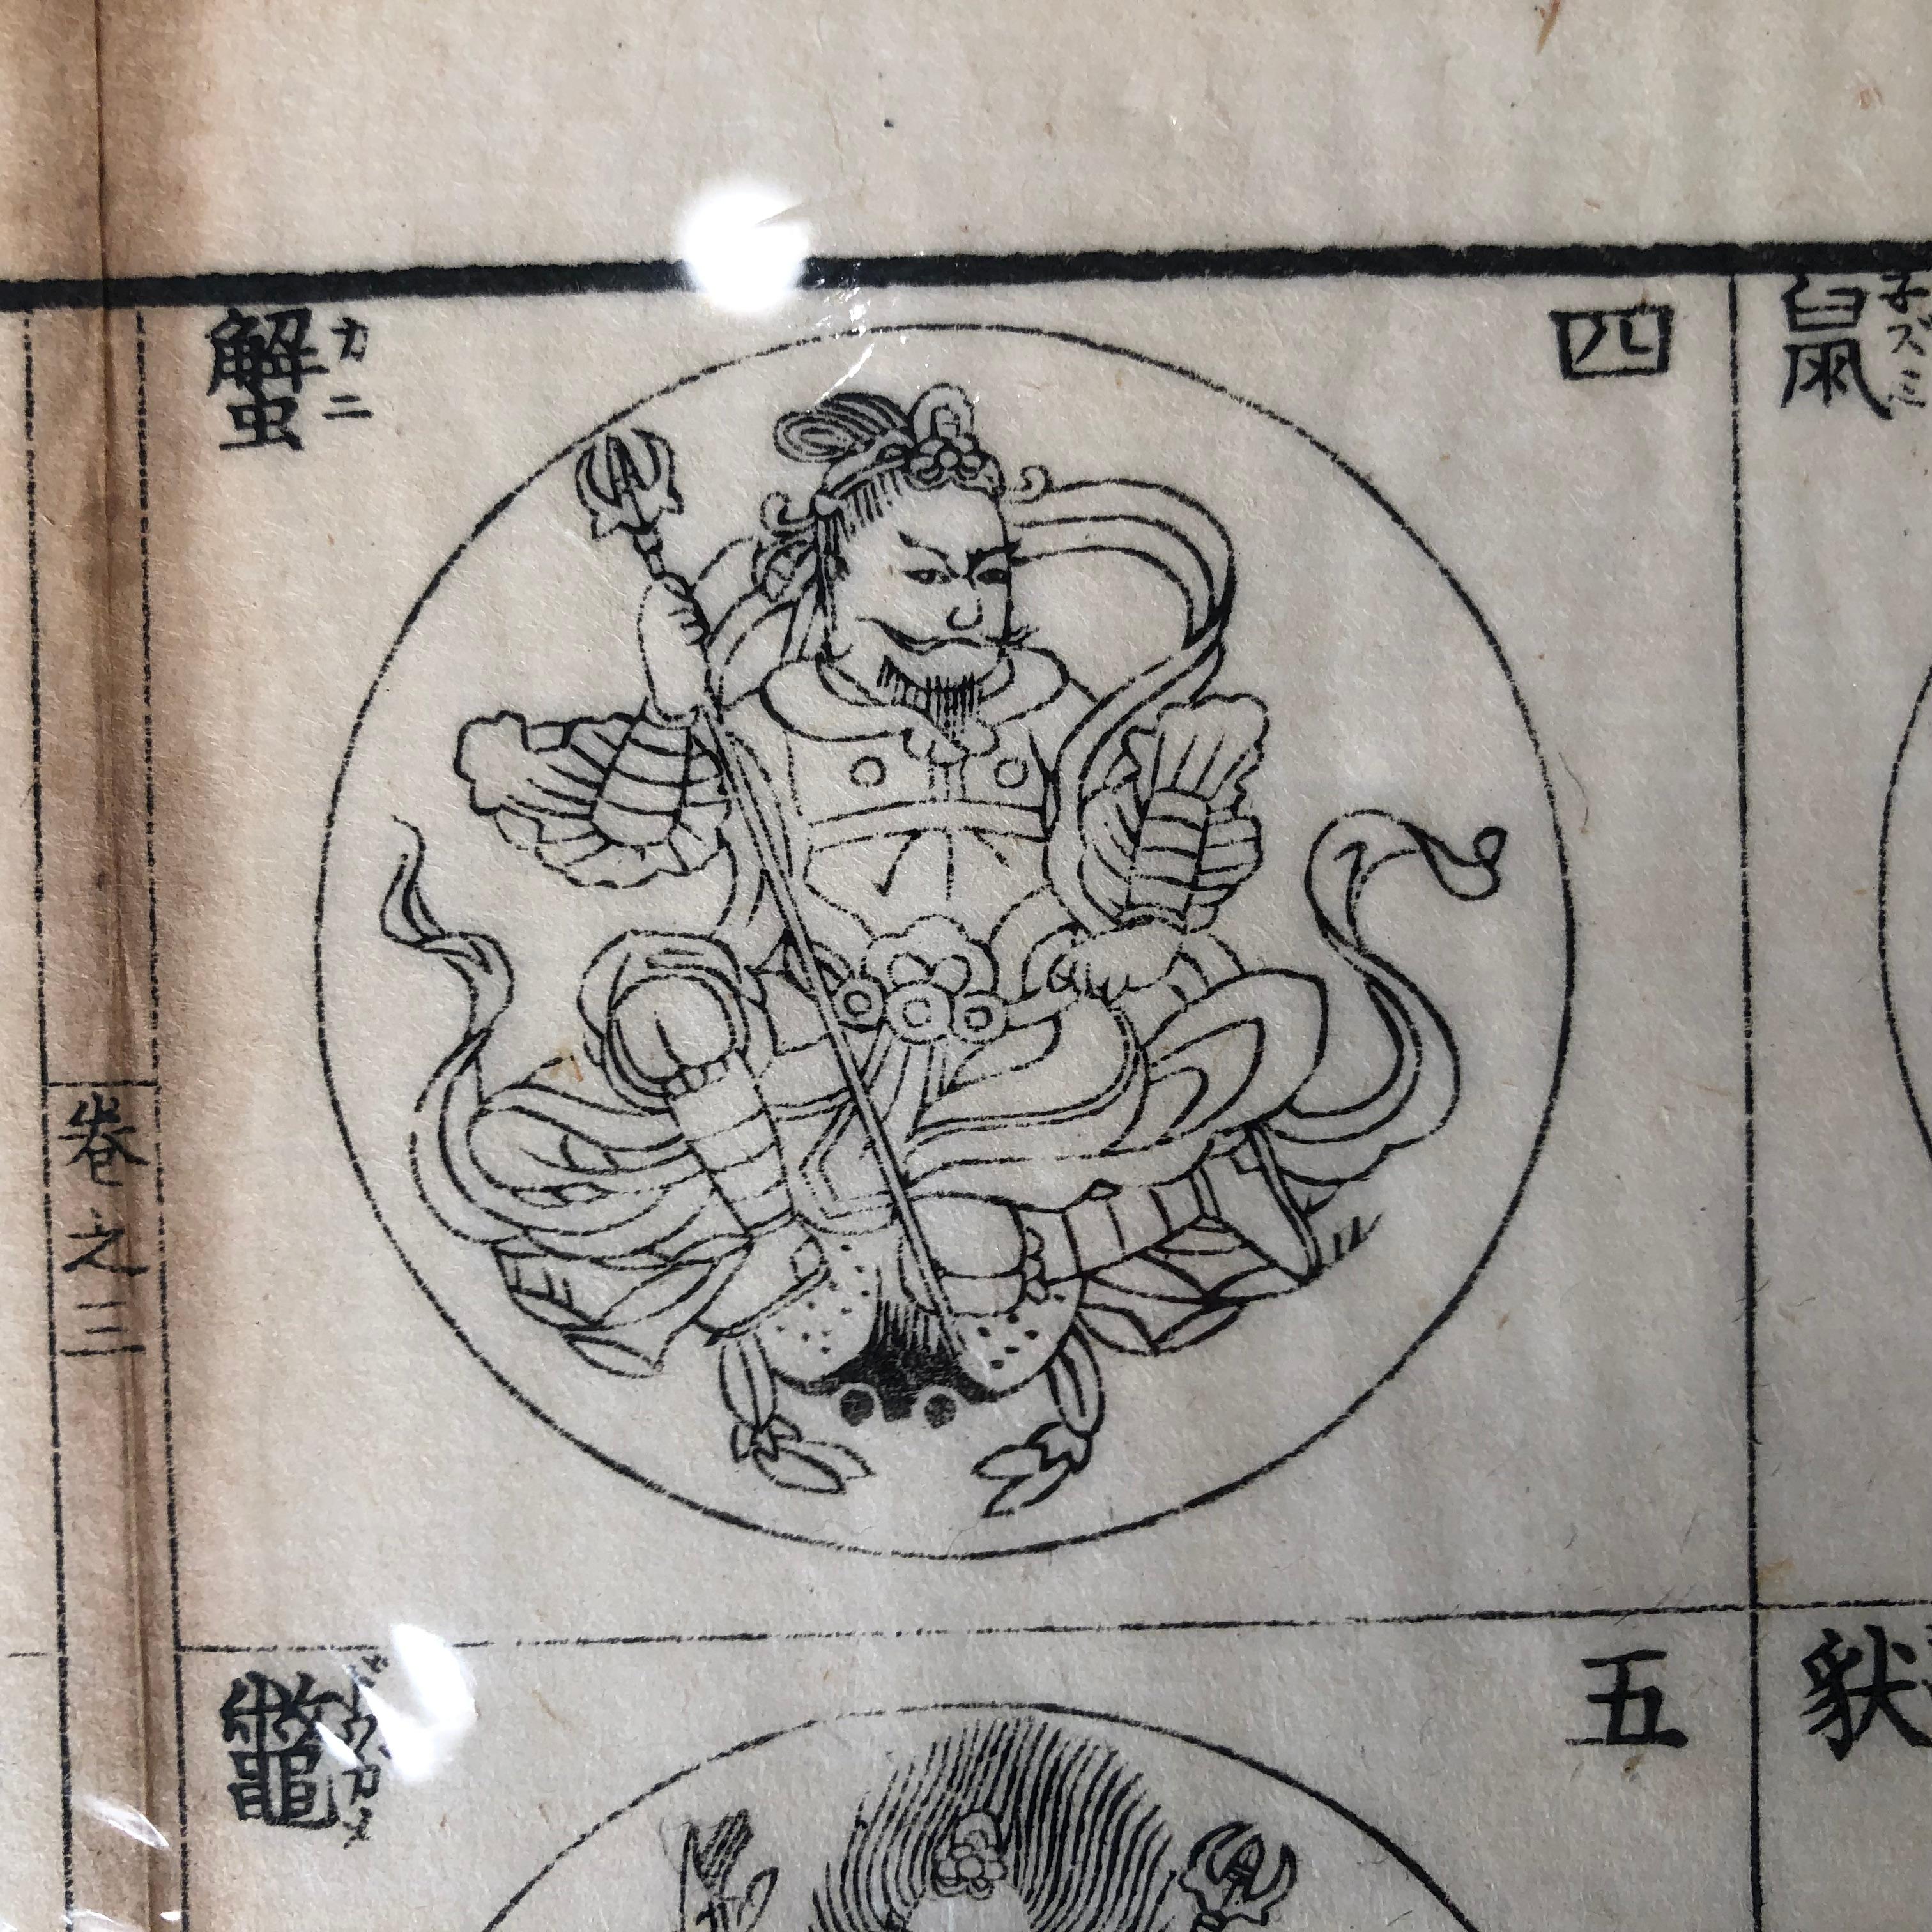 Japanese Four Antique Buddha Woodblock Prints, 1796, Immediately Frameable #1 2